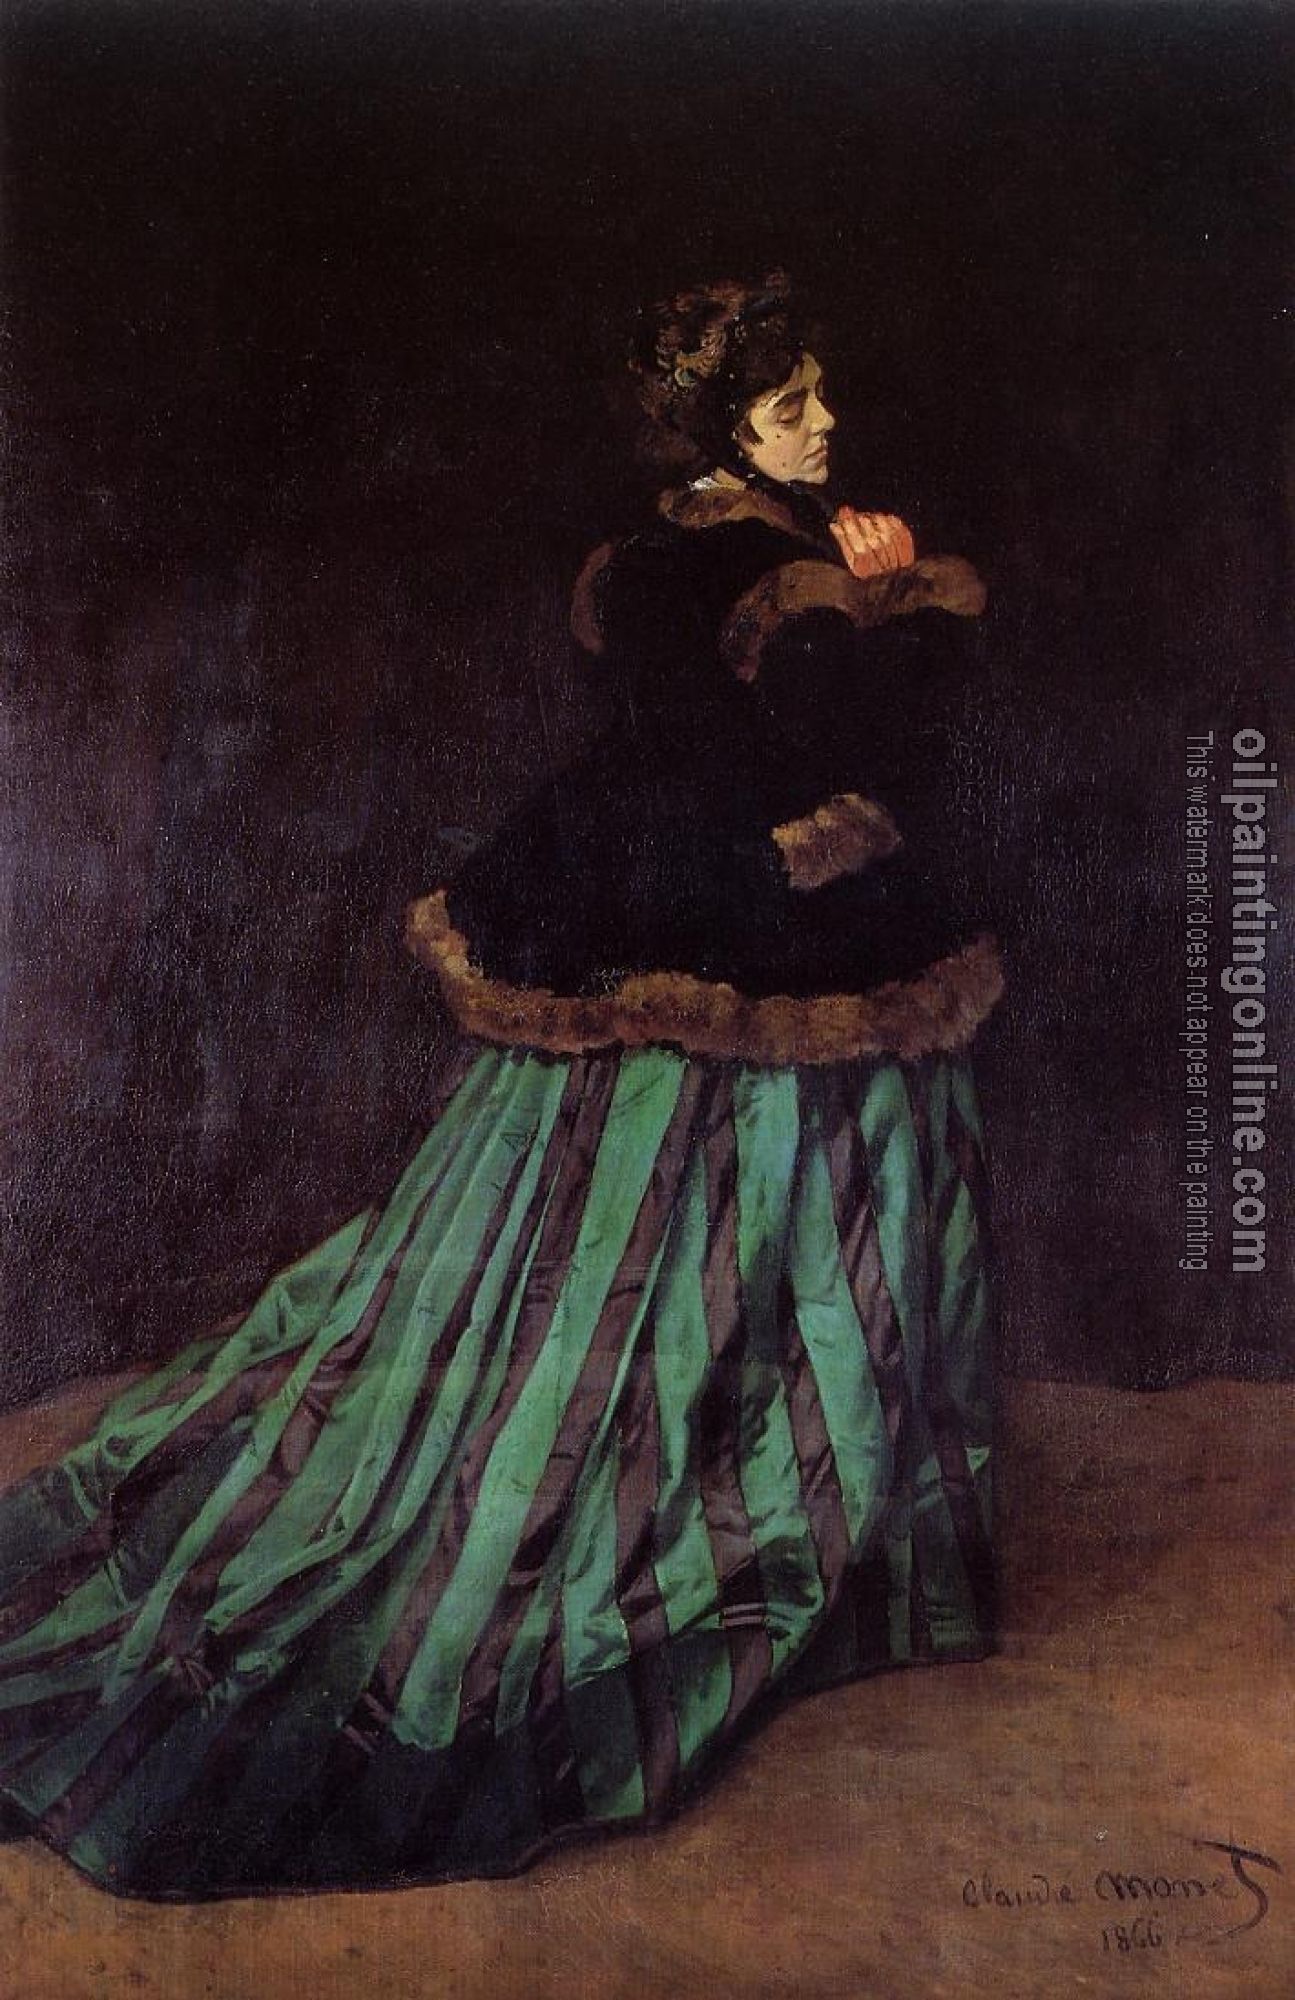 Monet, Claude Oscar - Camille, The Woman in a Green Dress